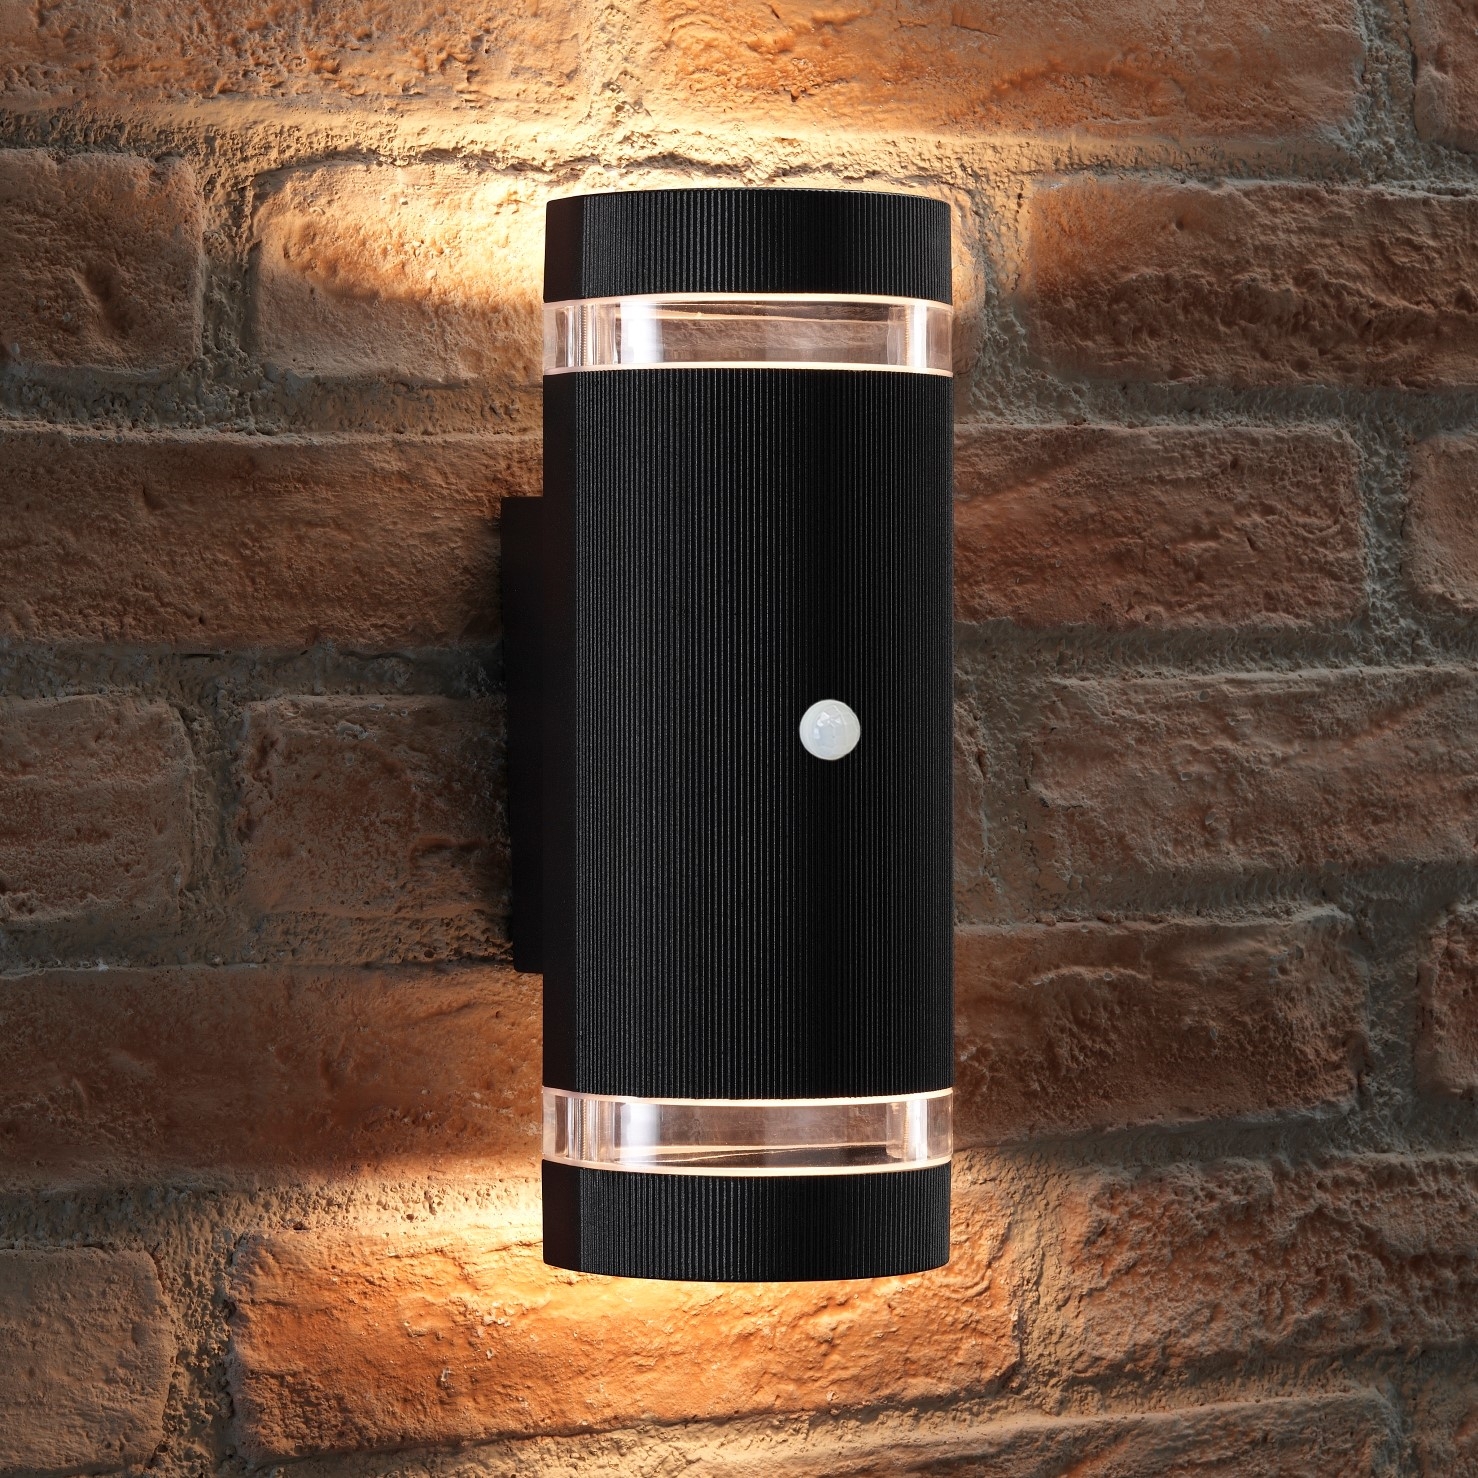 Litecraft Holme Black Lamp Outdoor Wall Light With Photocell Sensor 